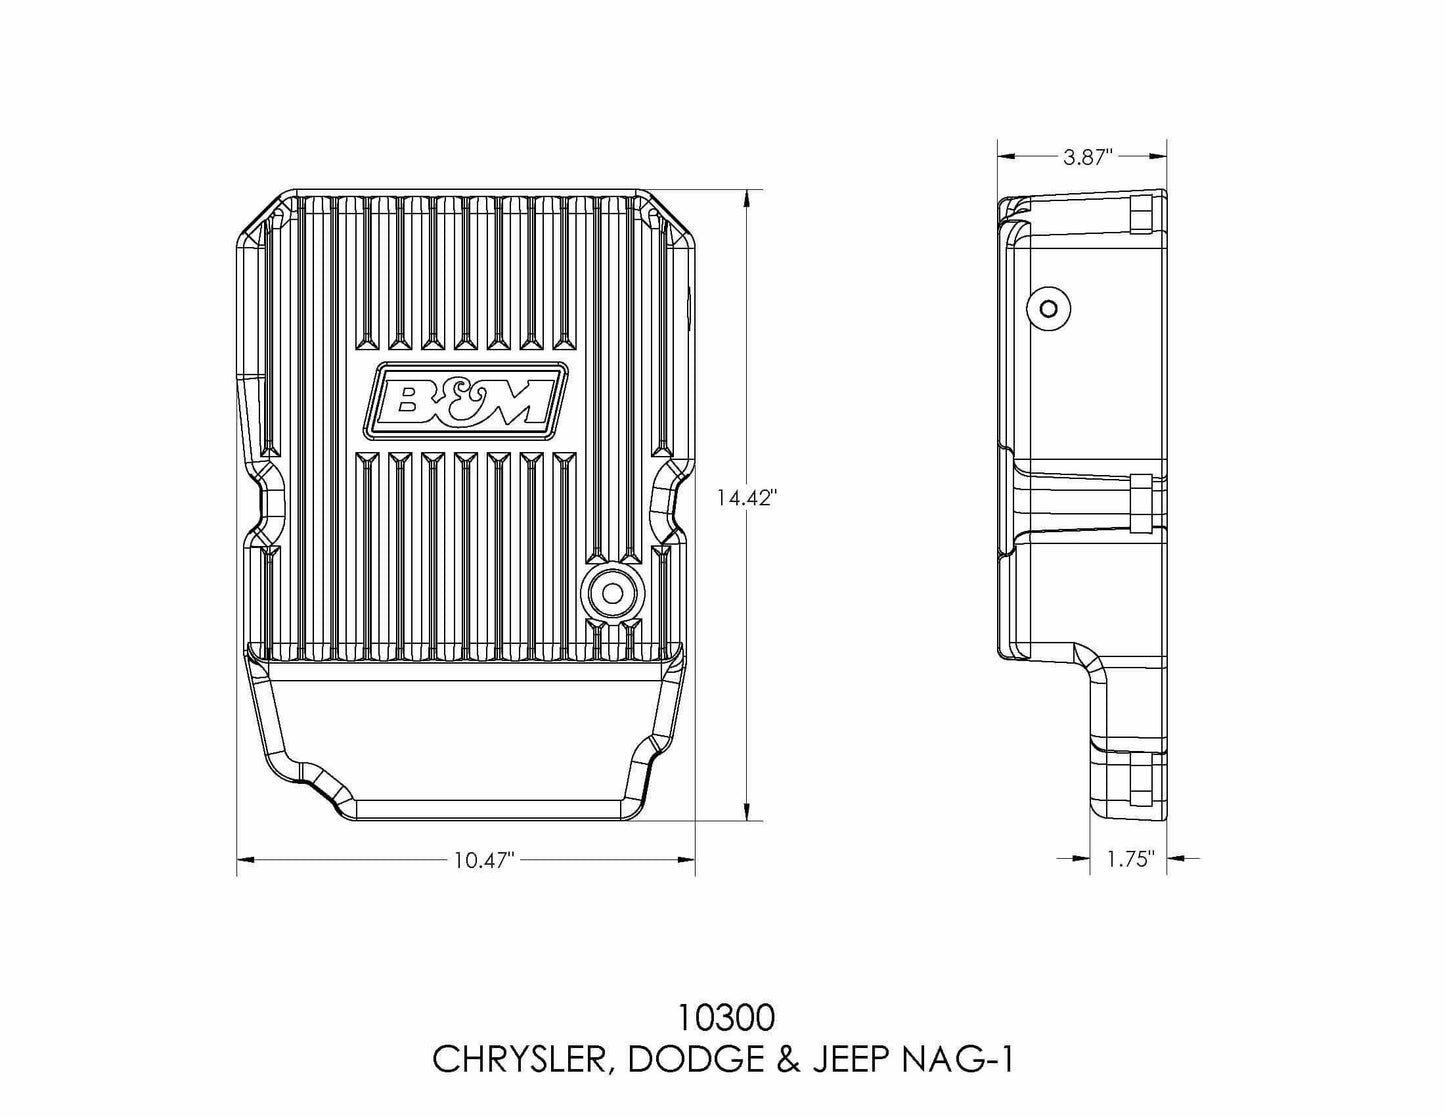 B&M Hi-Tek Deep Trans Pan for Chrysler, Dodge & Jeep NAG-1 Transmissions - 10300